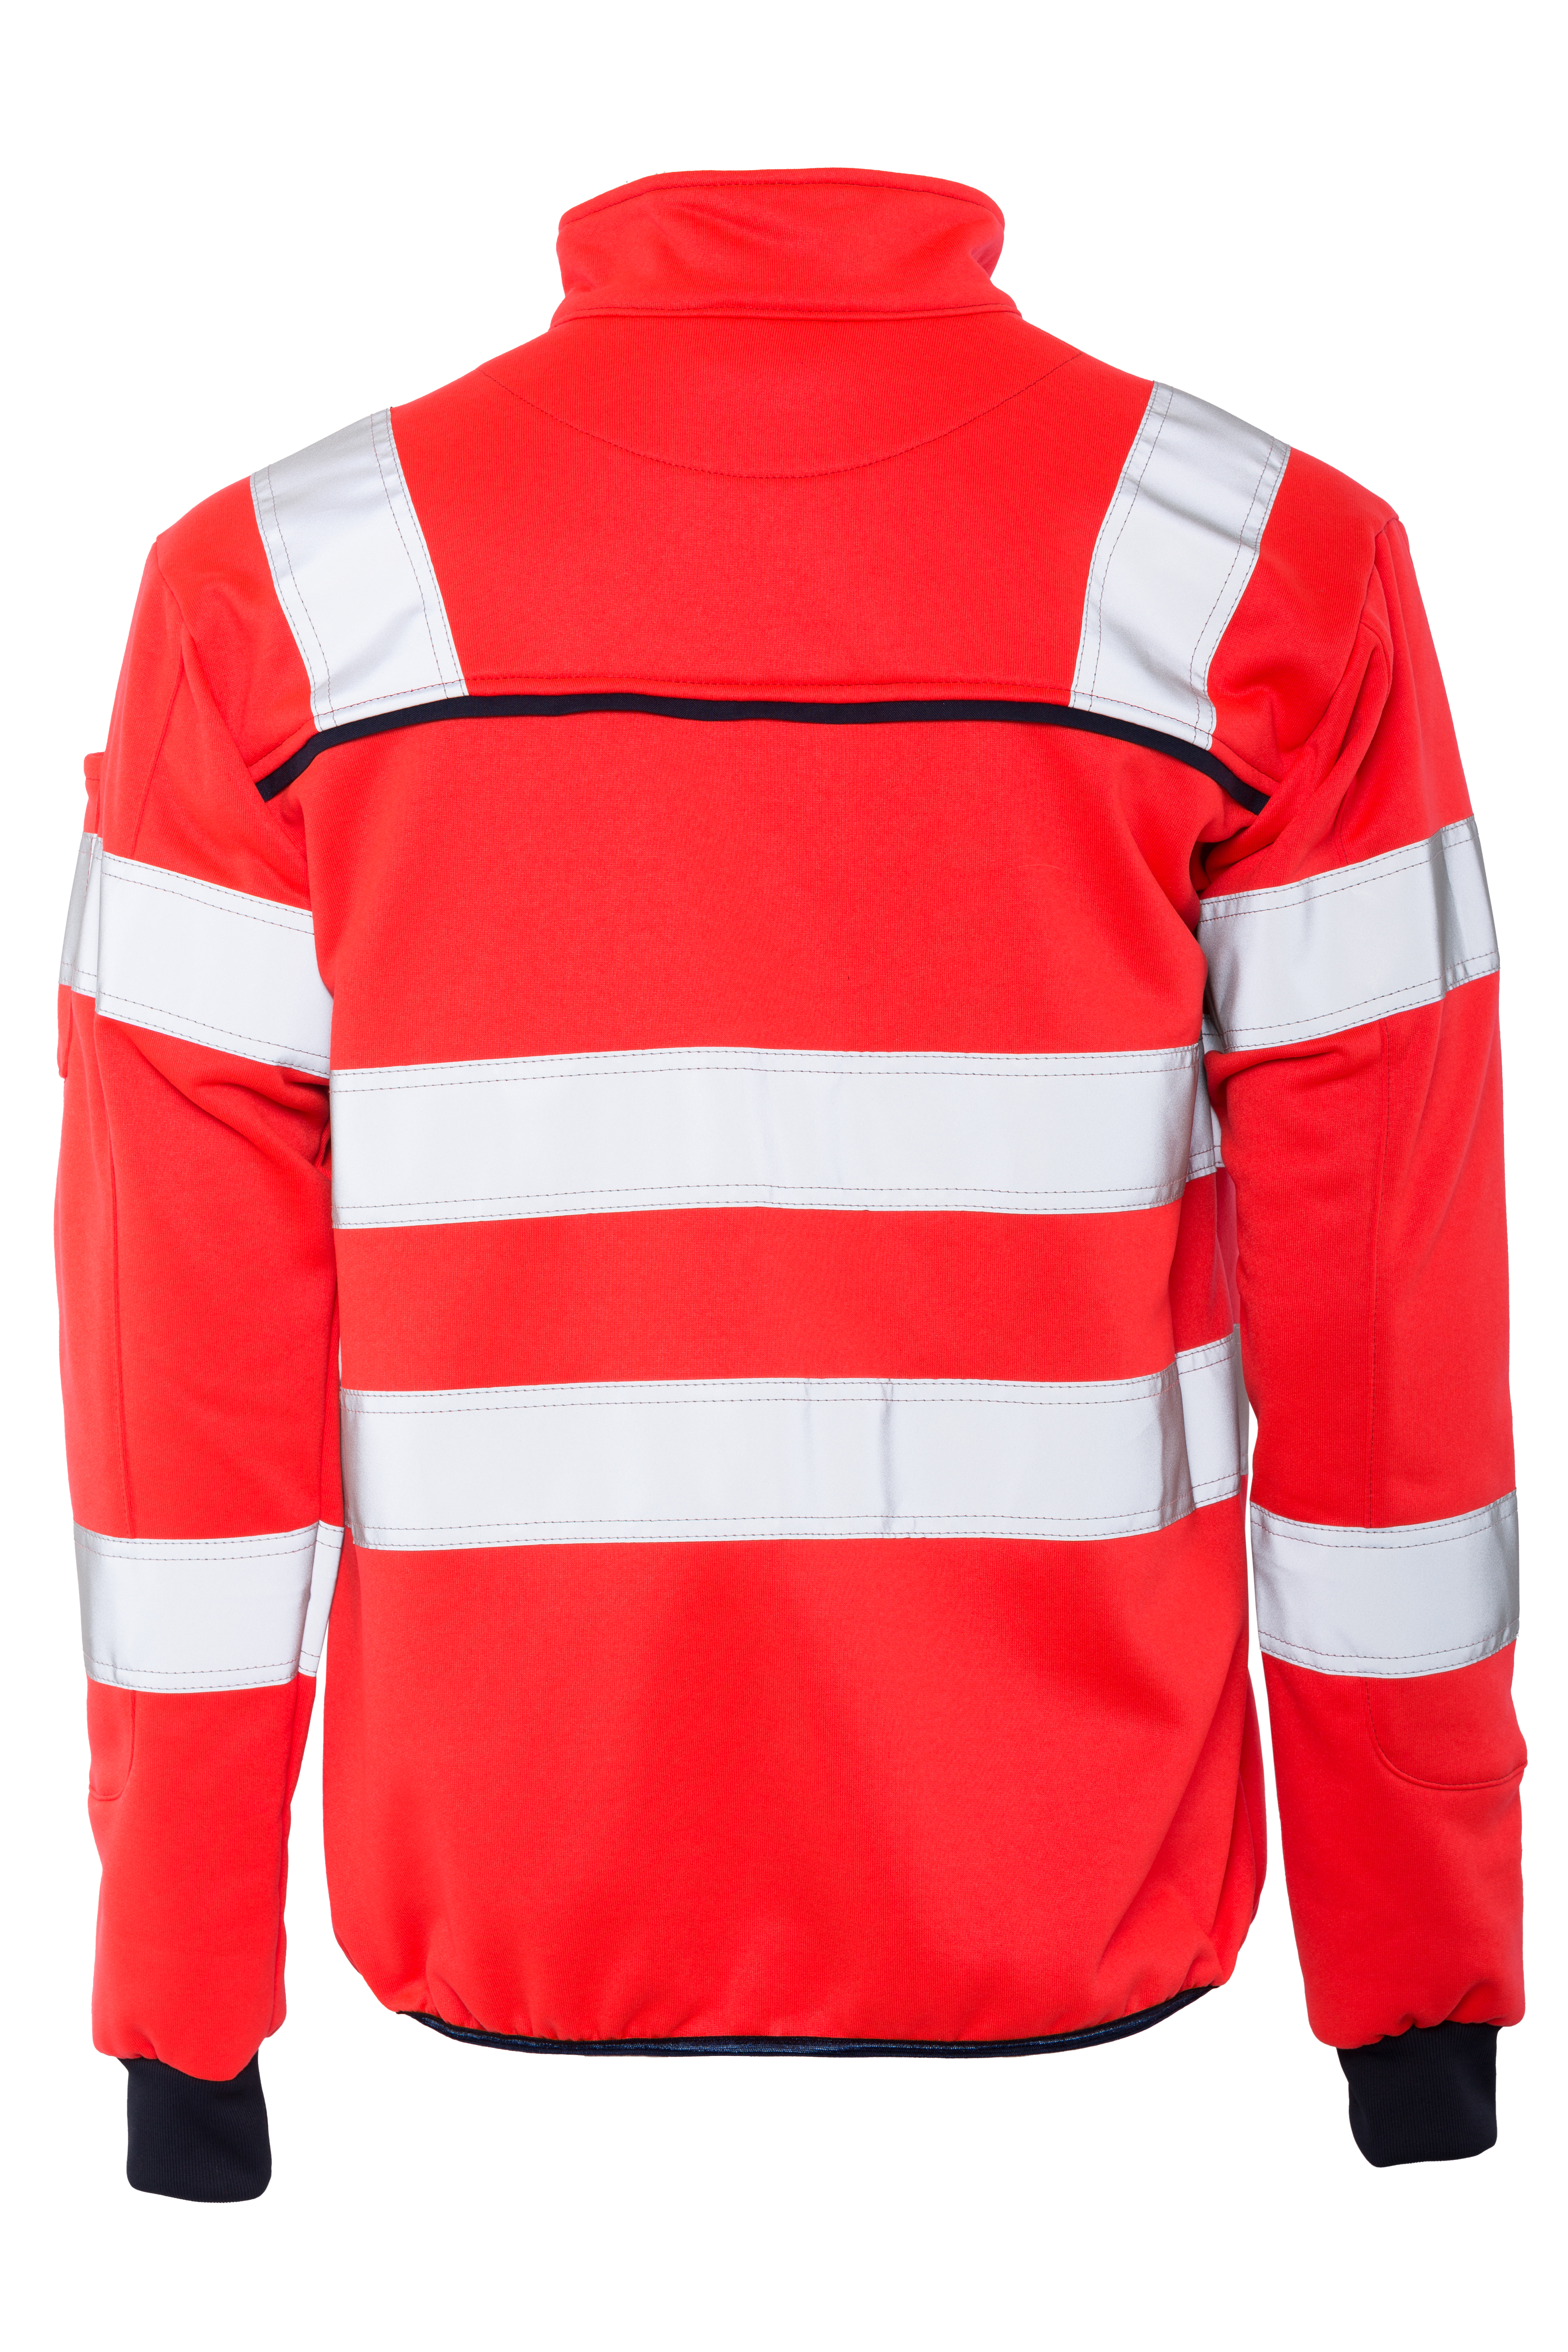 Rescuewear Sweatjacke Dynamic HiVis Klasse 3 Marineblau / Neon Rot`W-Linie` - XS